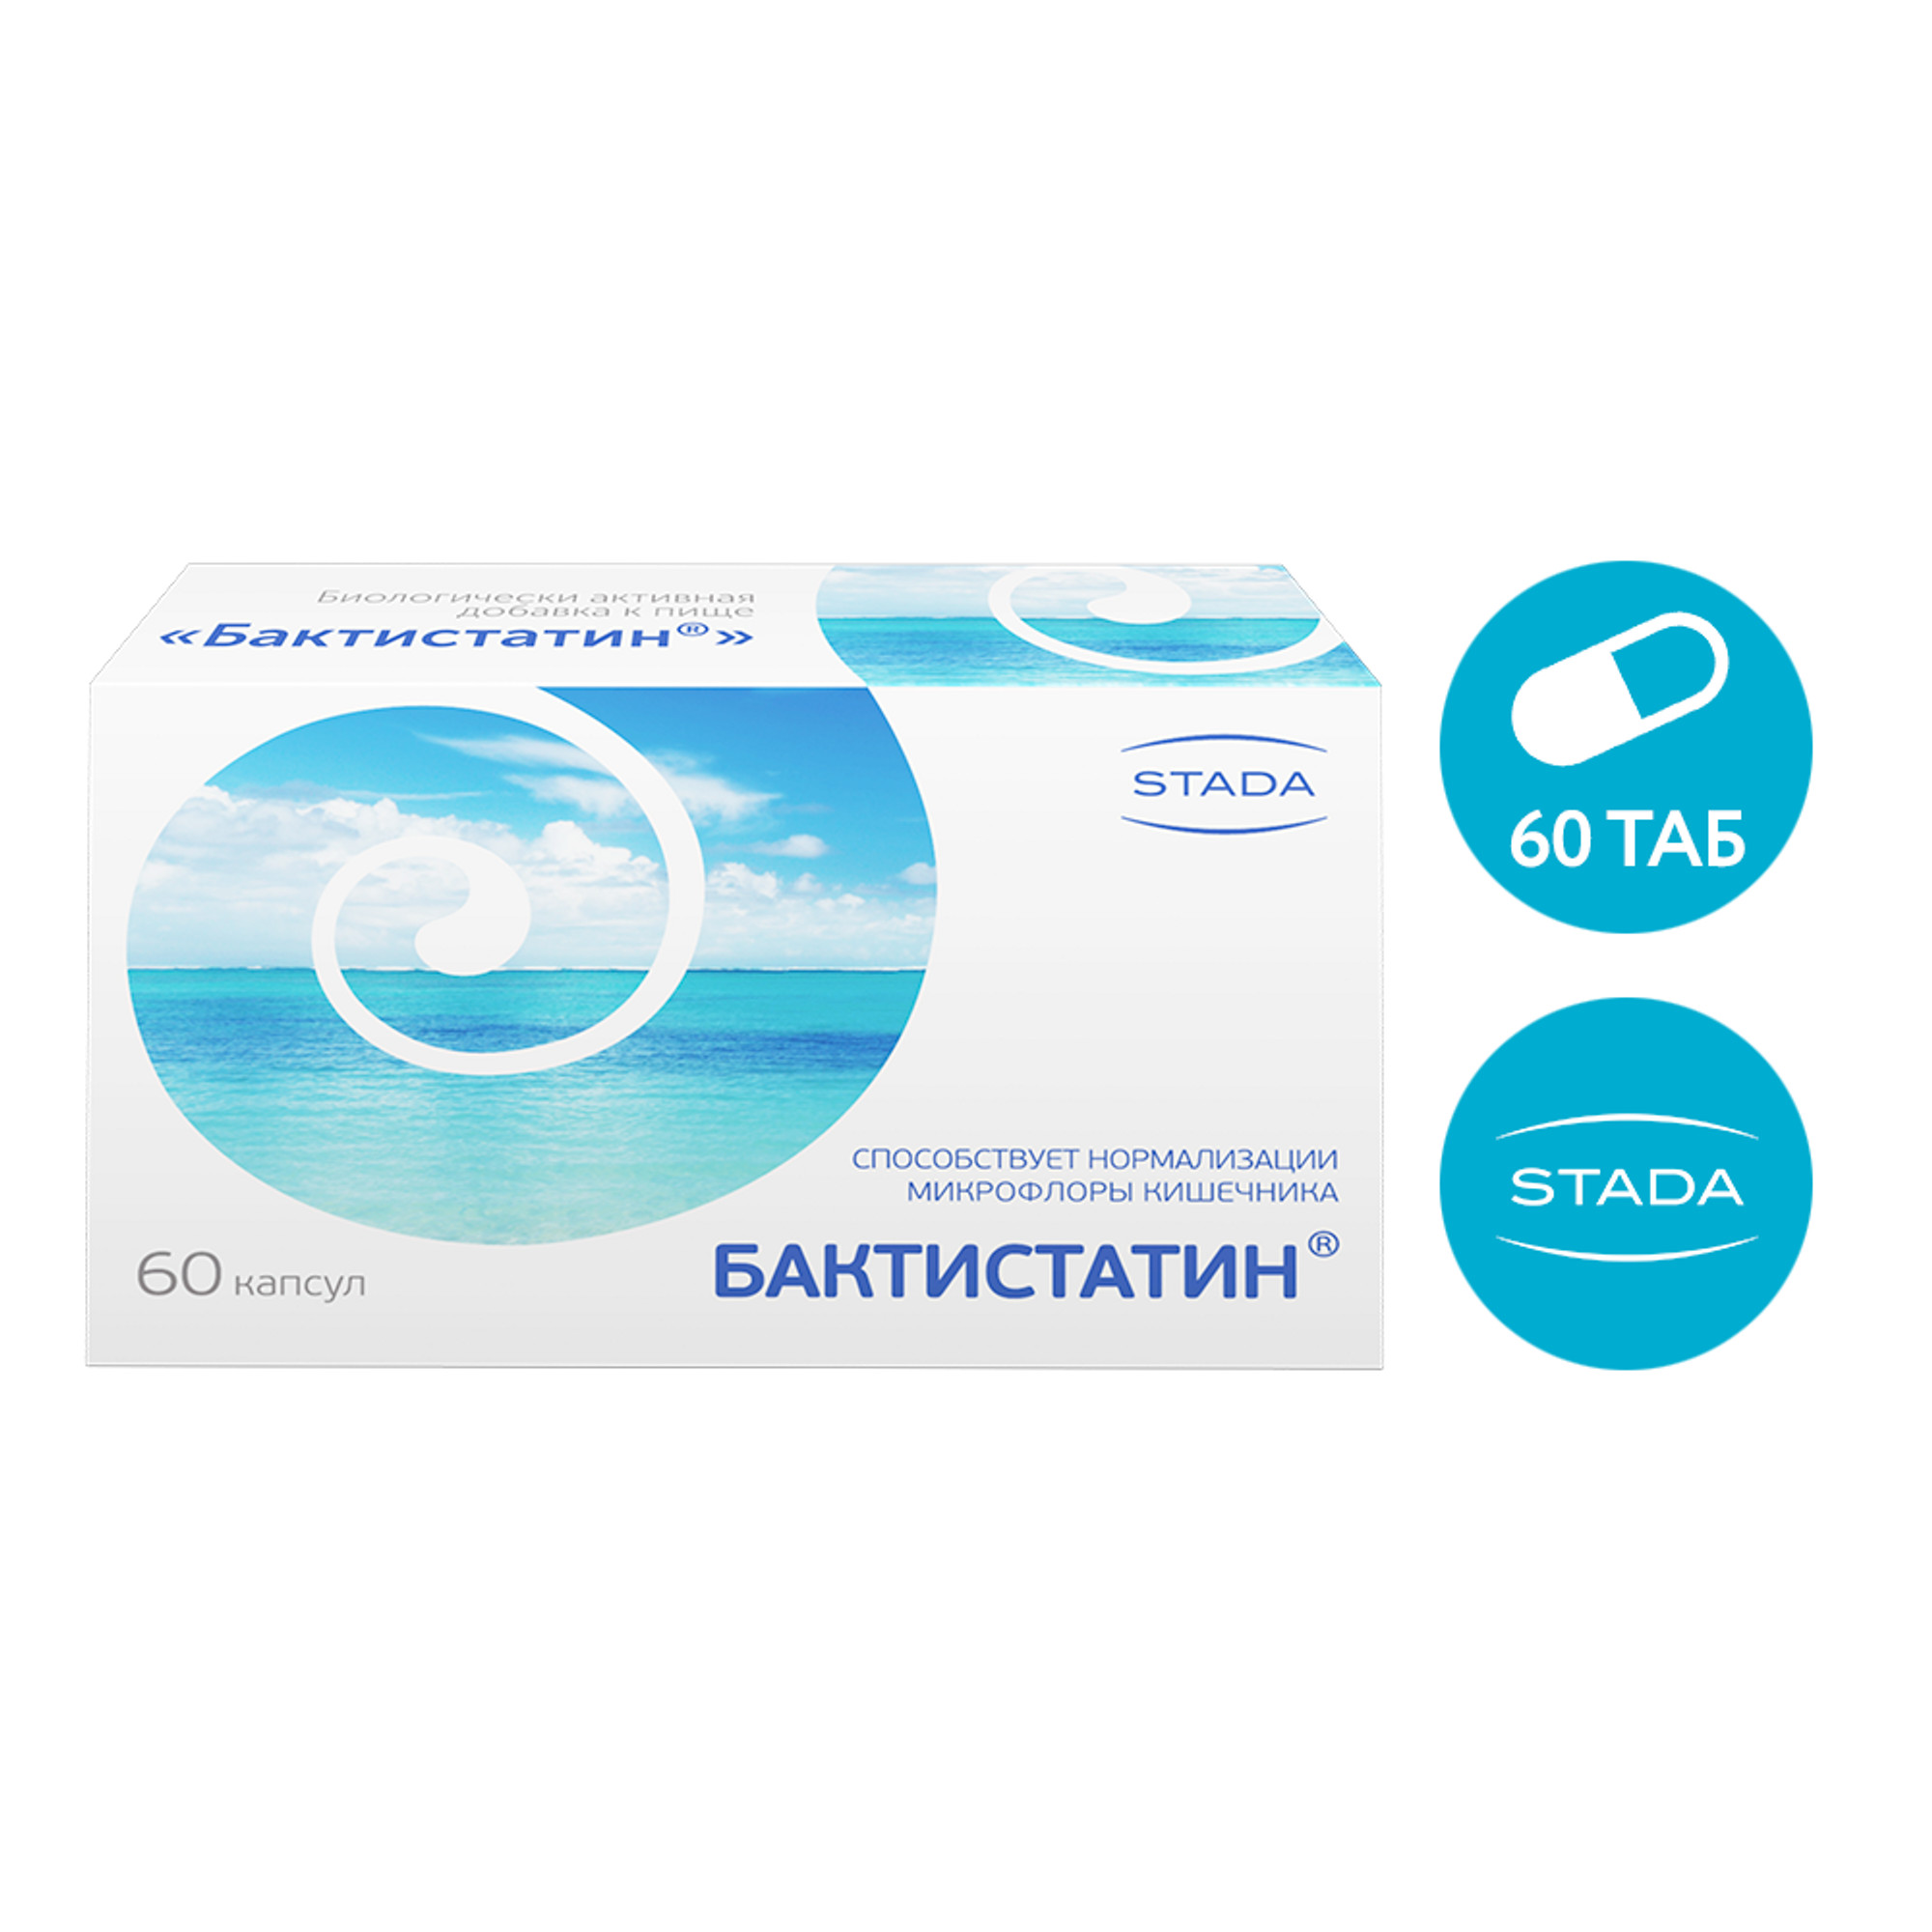 Бактистатин, капсулы 0.5 г, 60 шт. бактистатин капсулы 0 5 г 60 шт